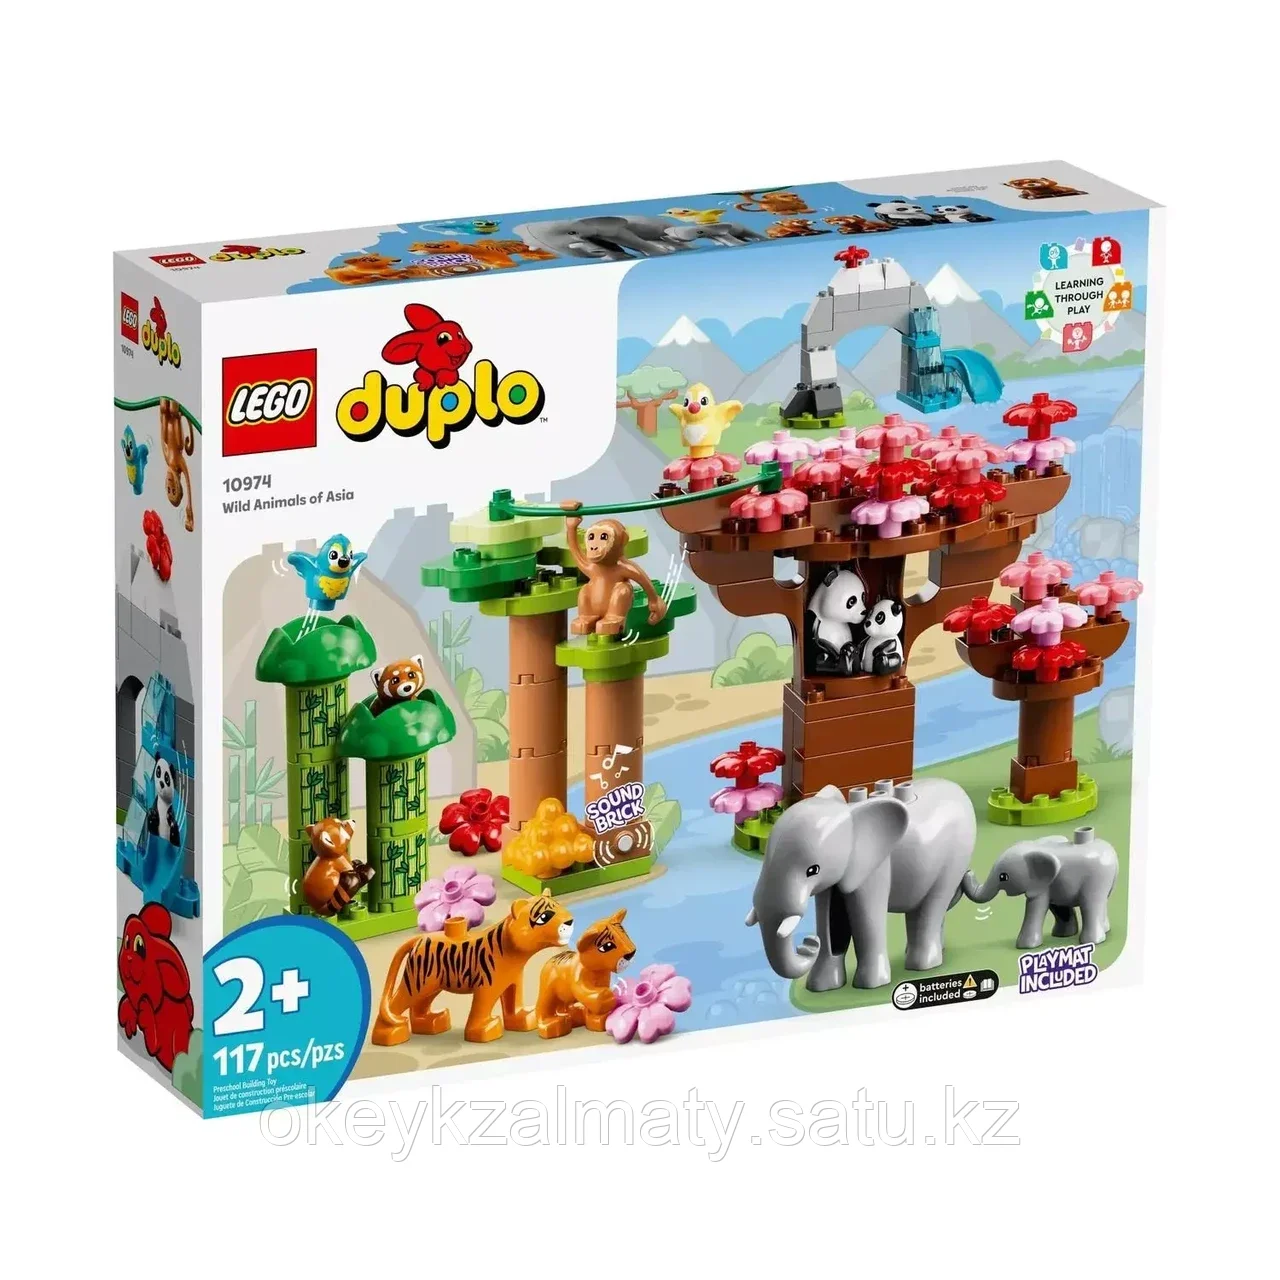 LEGO Дикие животные Азии DUPLO 10974